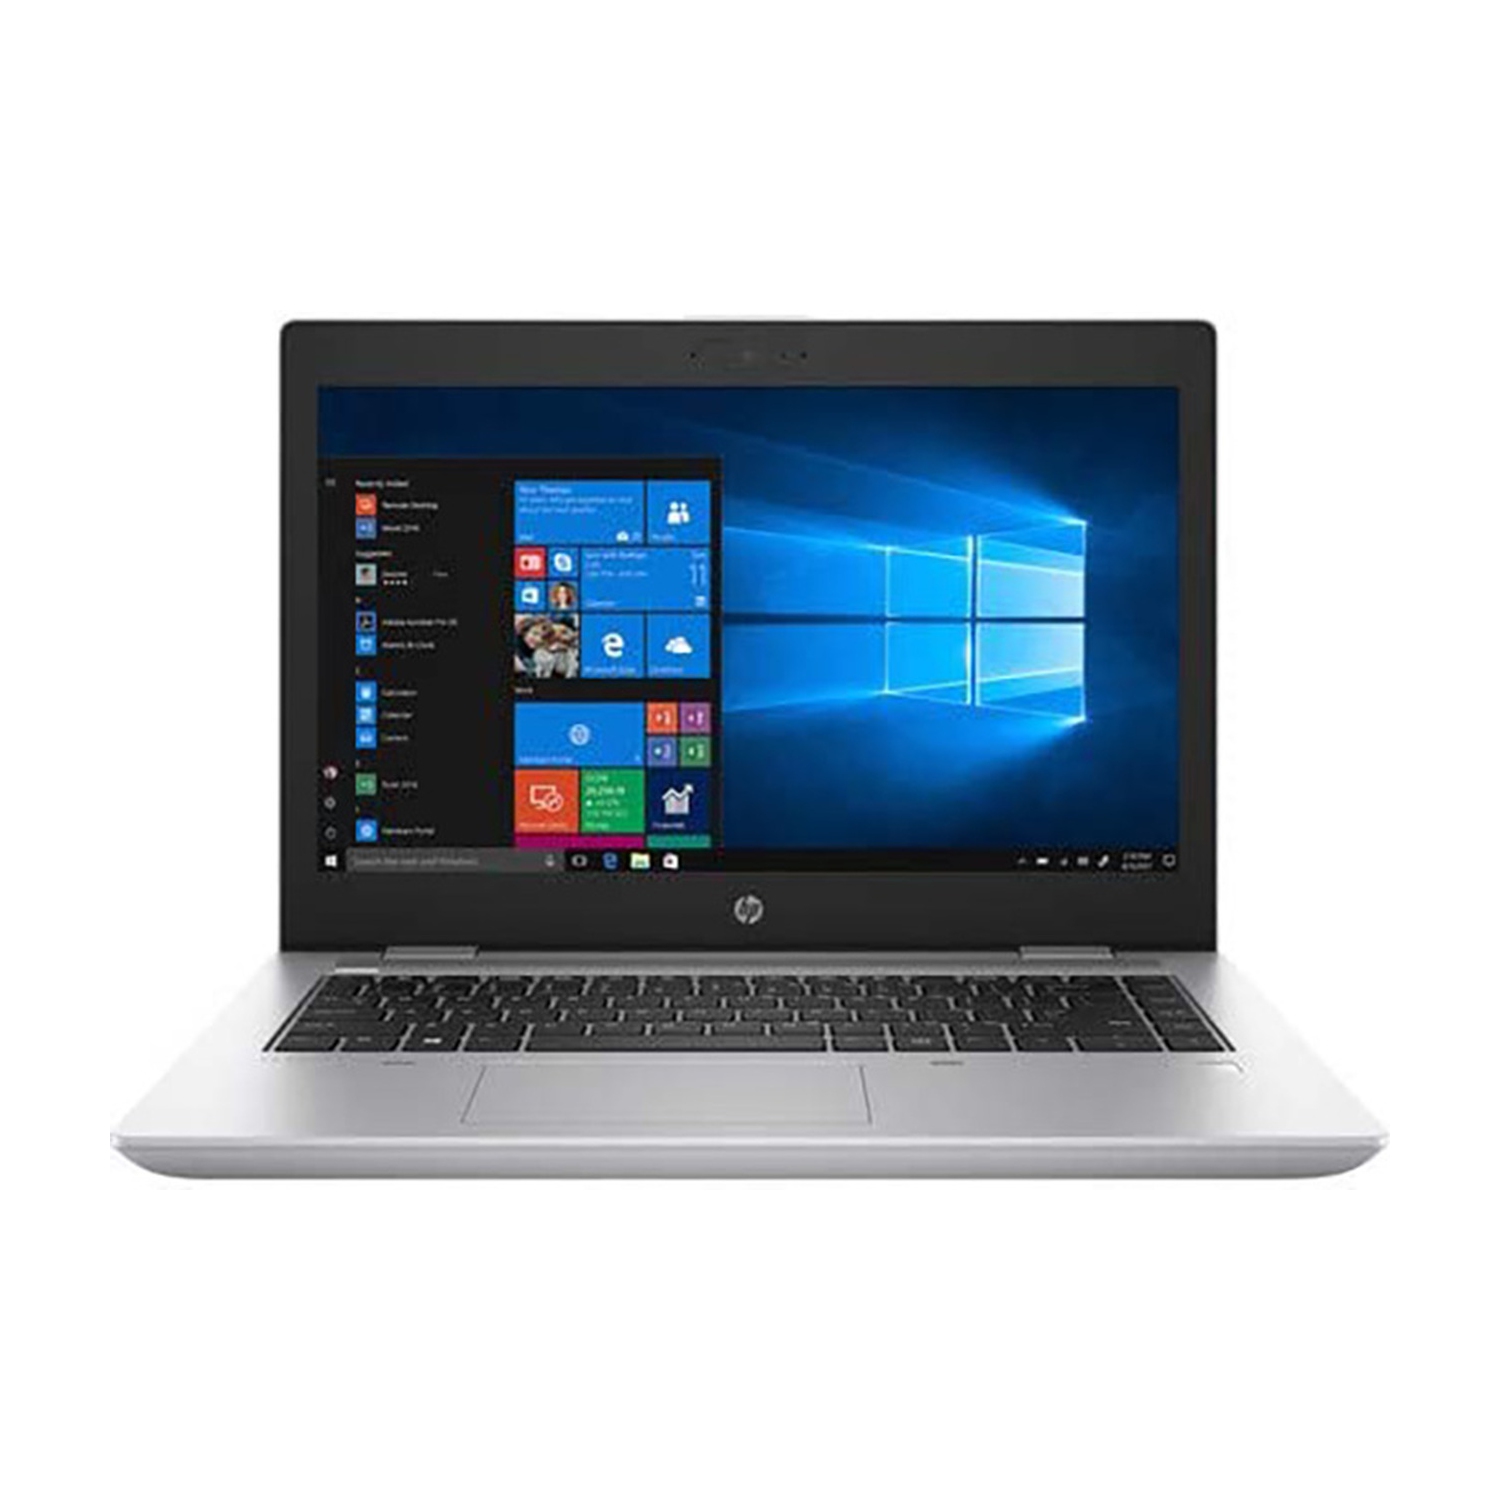 Refurbished (Good) - HP ProBook 640 G5, 14" 1920 x 1080 Anti-Glare IPS Display, I5-8265U@1.60GHZ, 8GB, 256GB, WiFi, BT, Webcam, Backlit Keyboard, Fingerprint Reader, Win 10 Pro